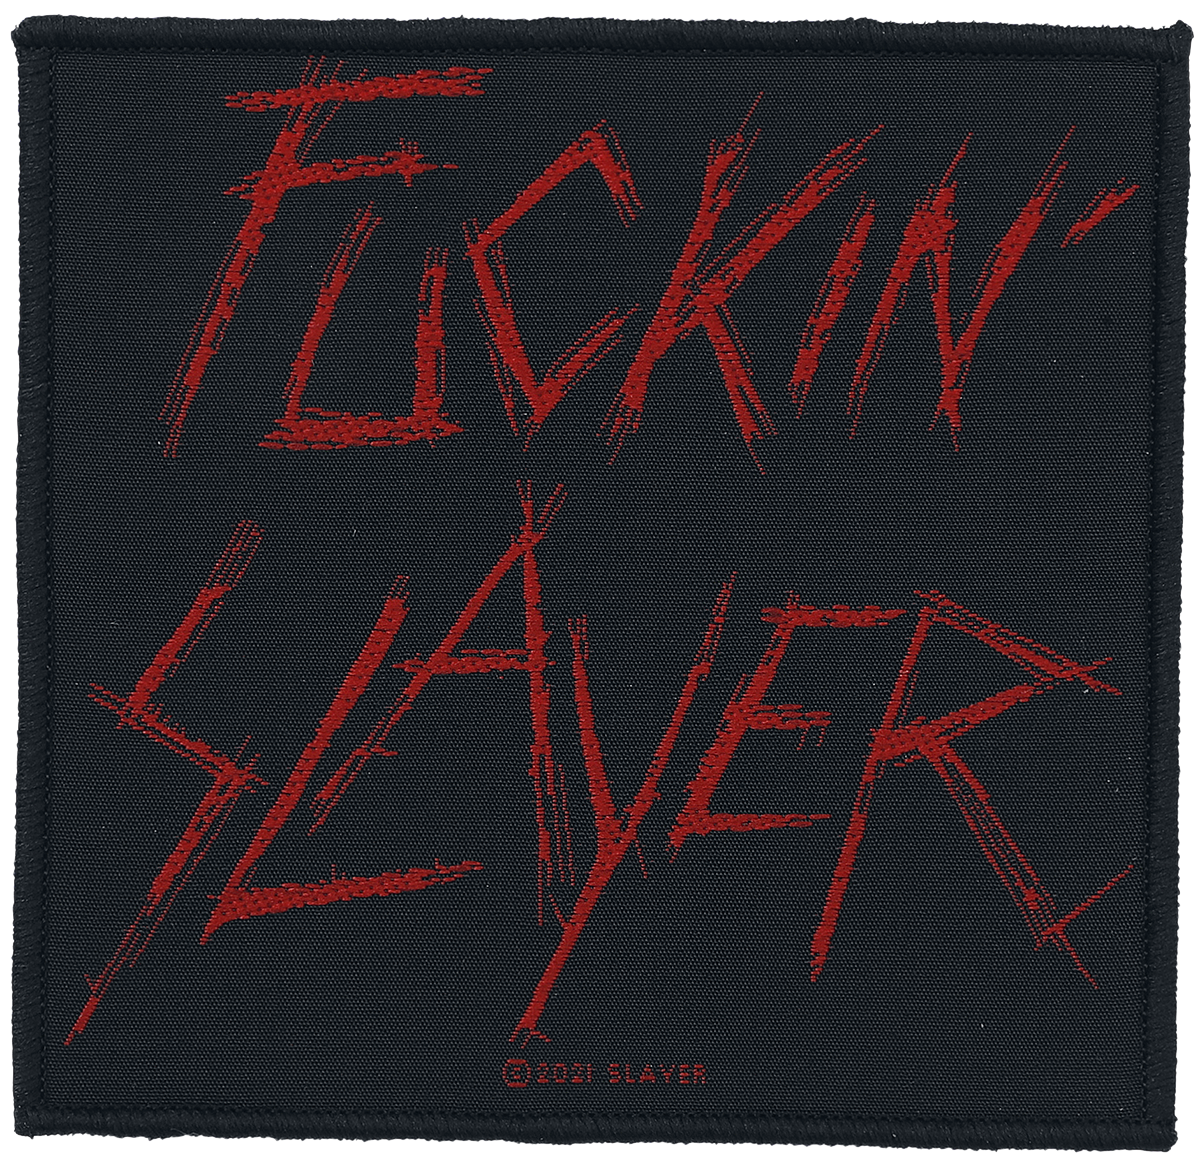 Slayer - Slayer - Patch - schwarz| rot